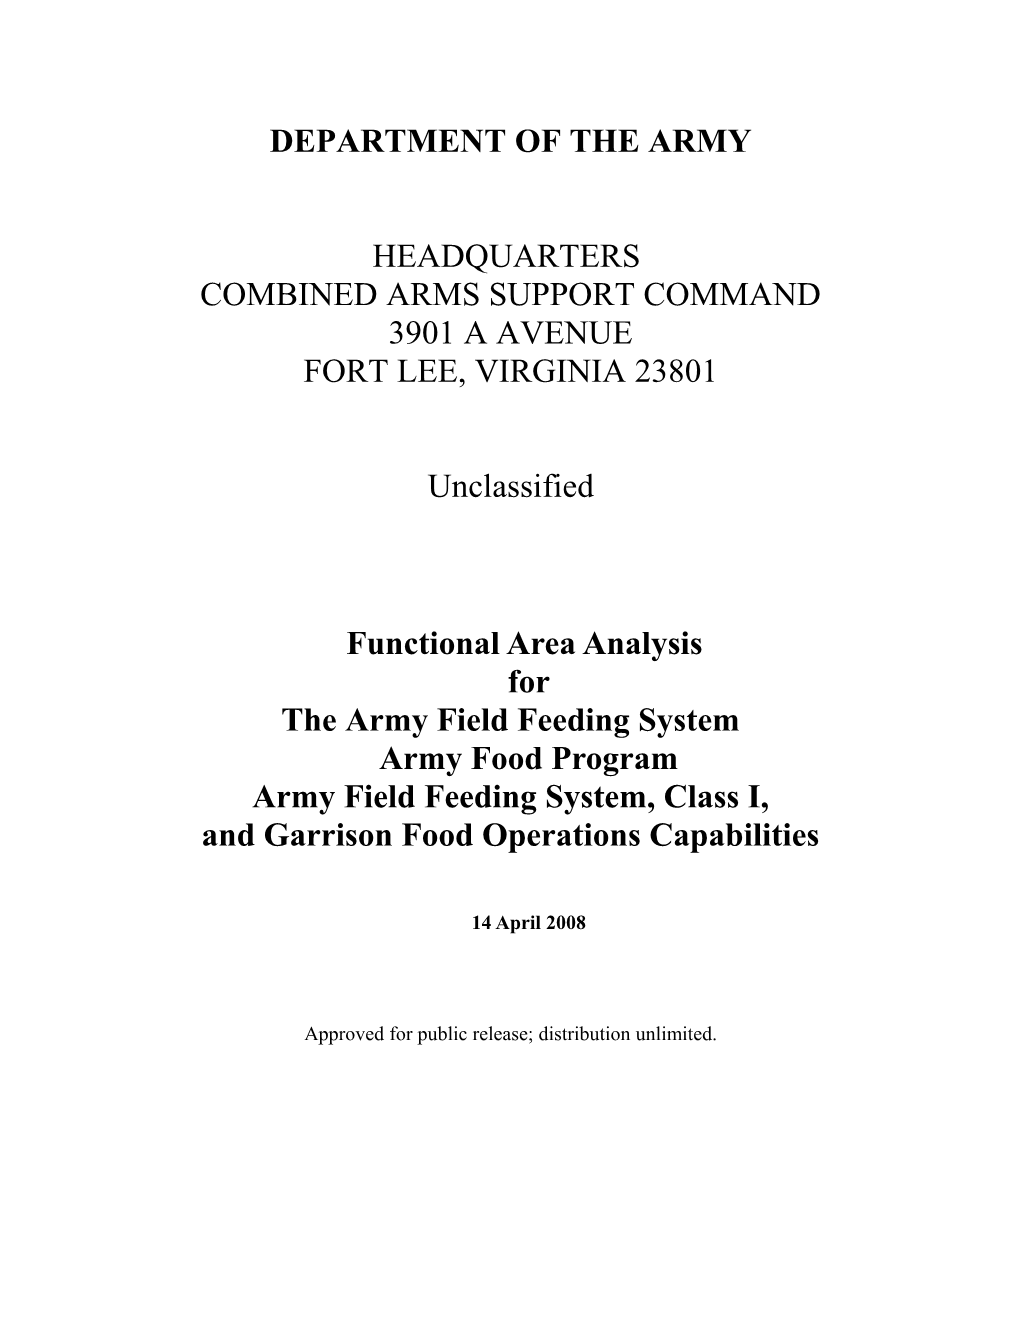 Army Food Program (AFP) FAA